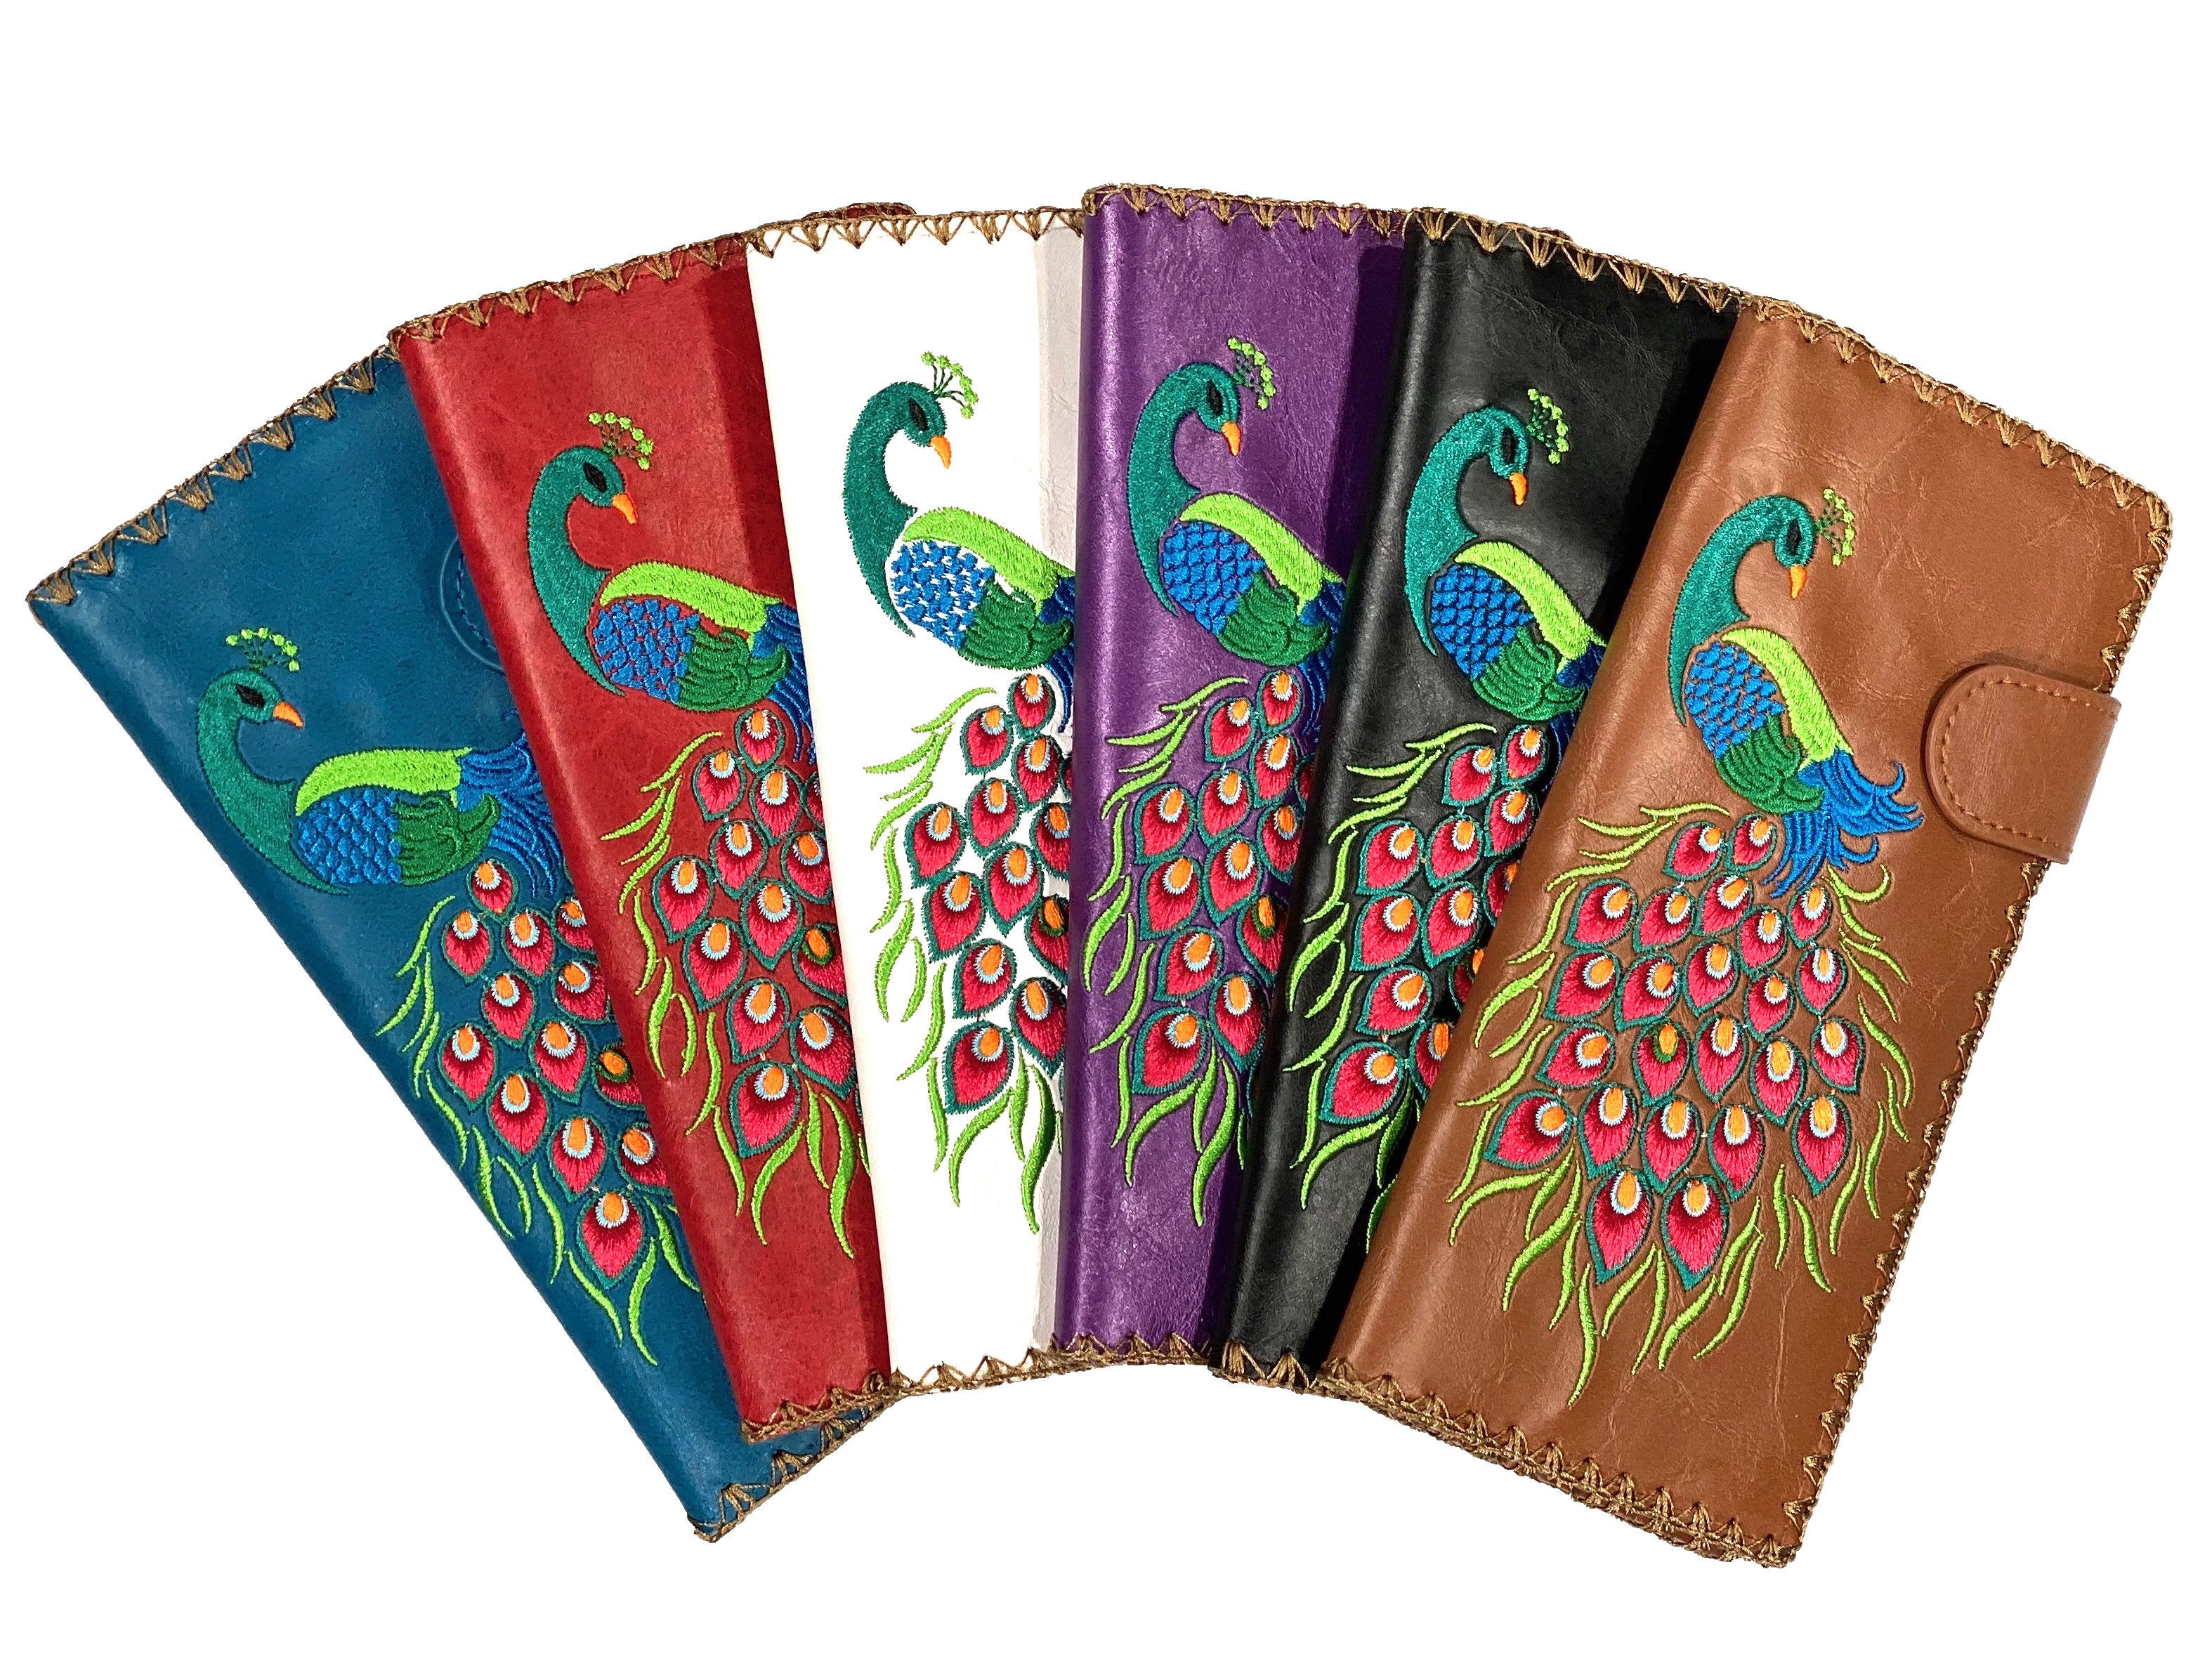 Lavishy Embroidered Peacock - Large Flat Vegan Wallet    